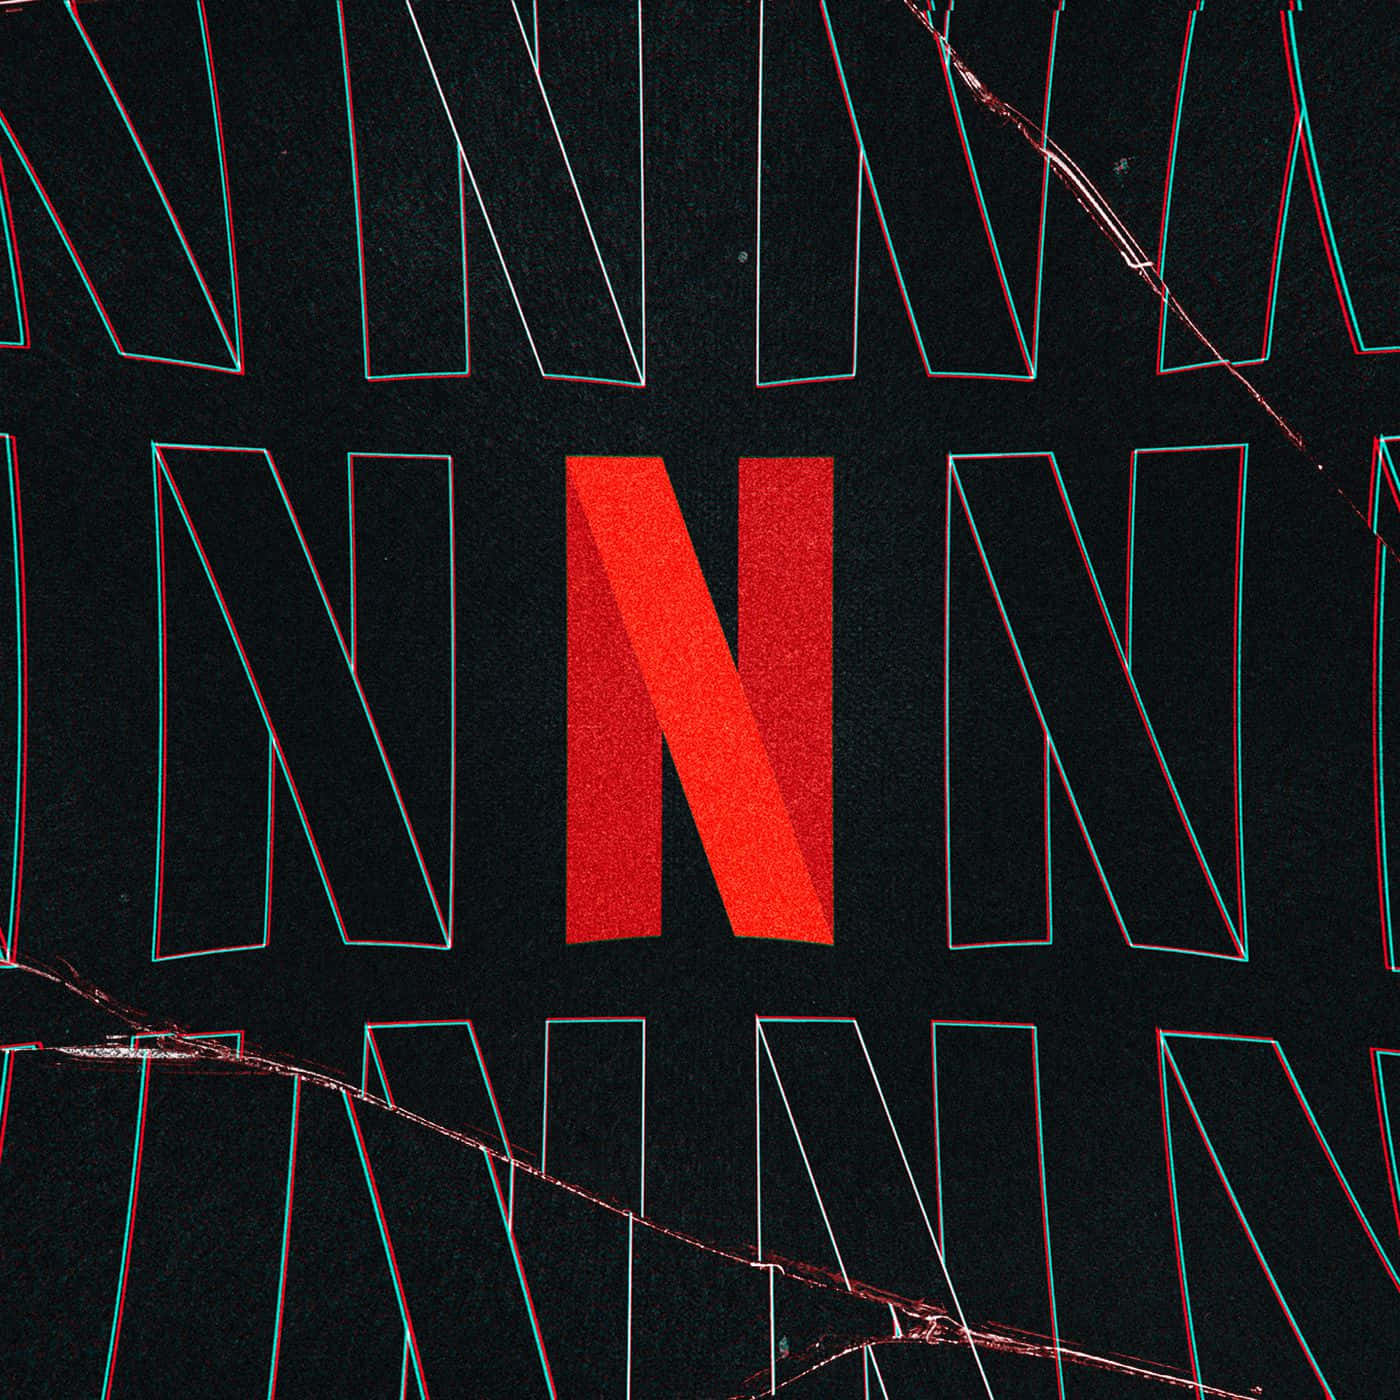 Netflixlogotypen På En Svart Bakgrund